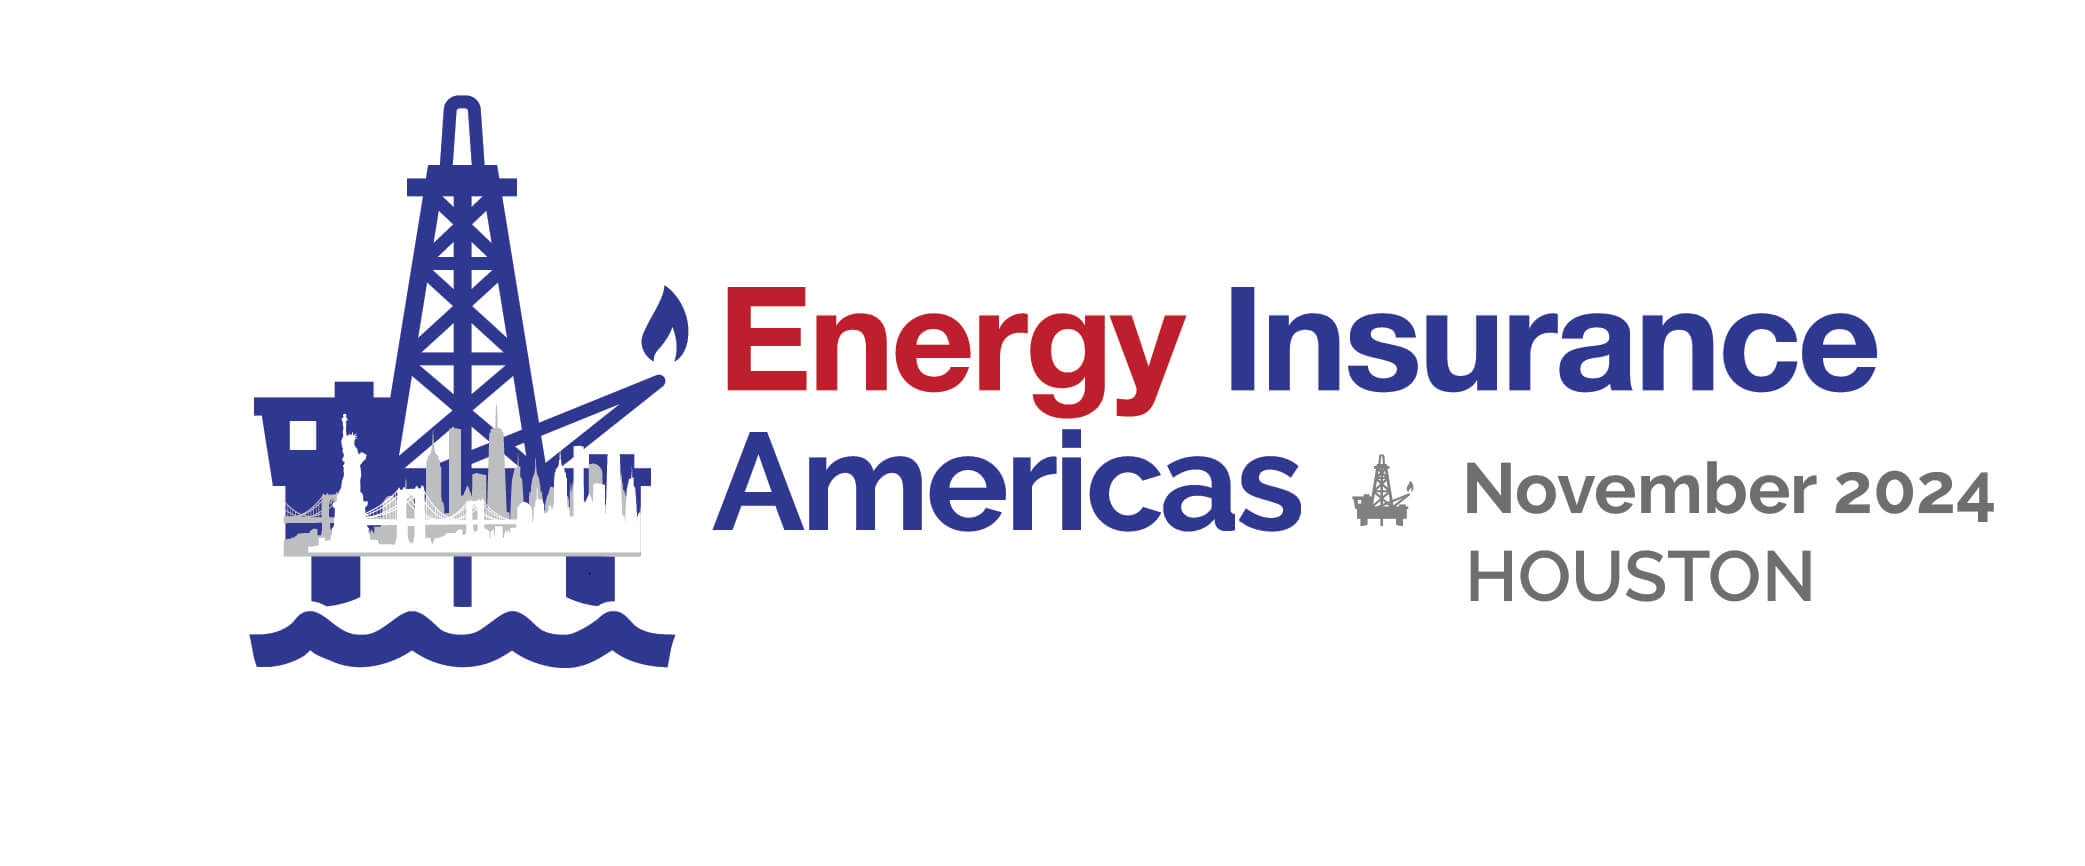 Energy Insurance Americas